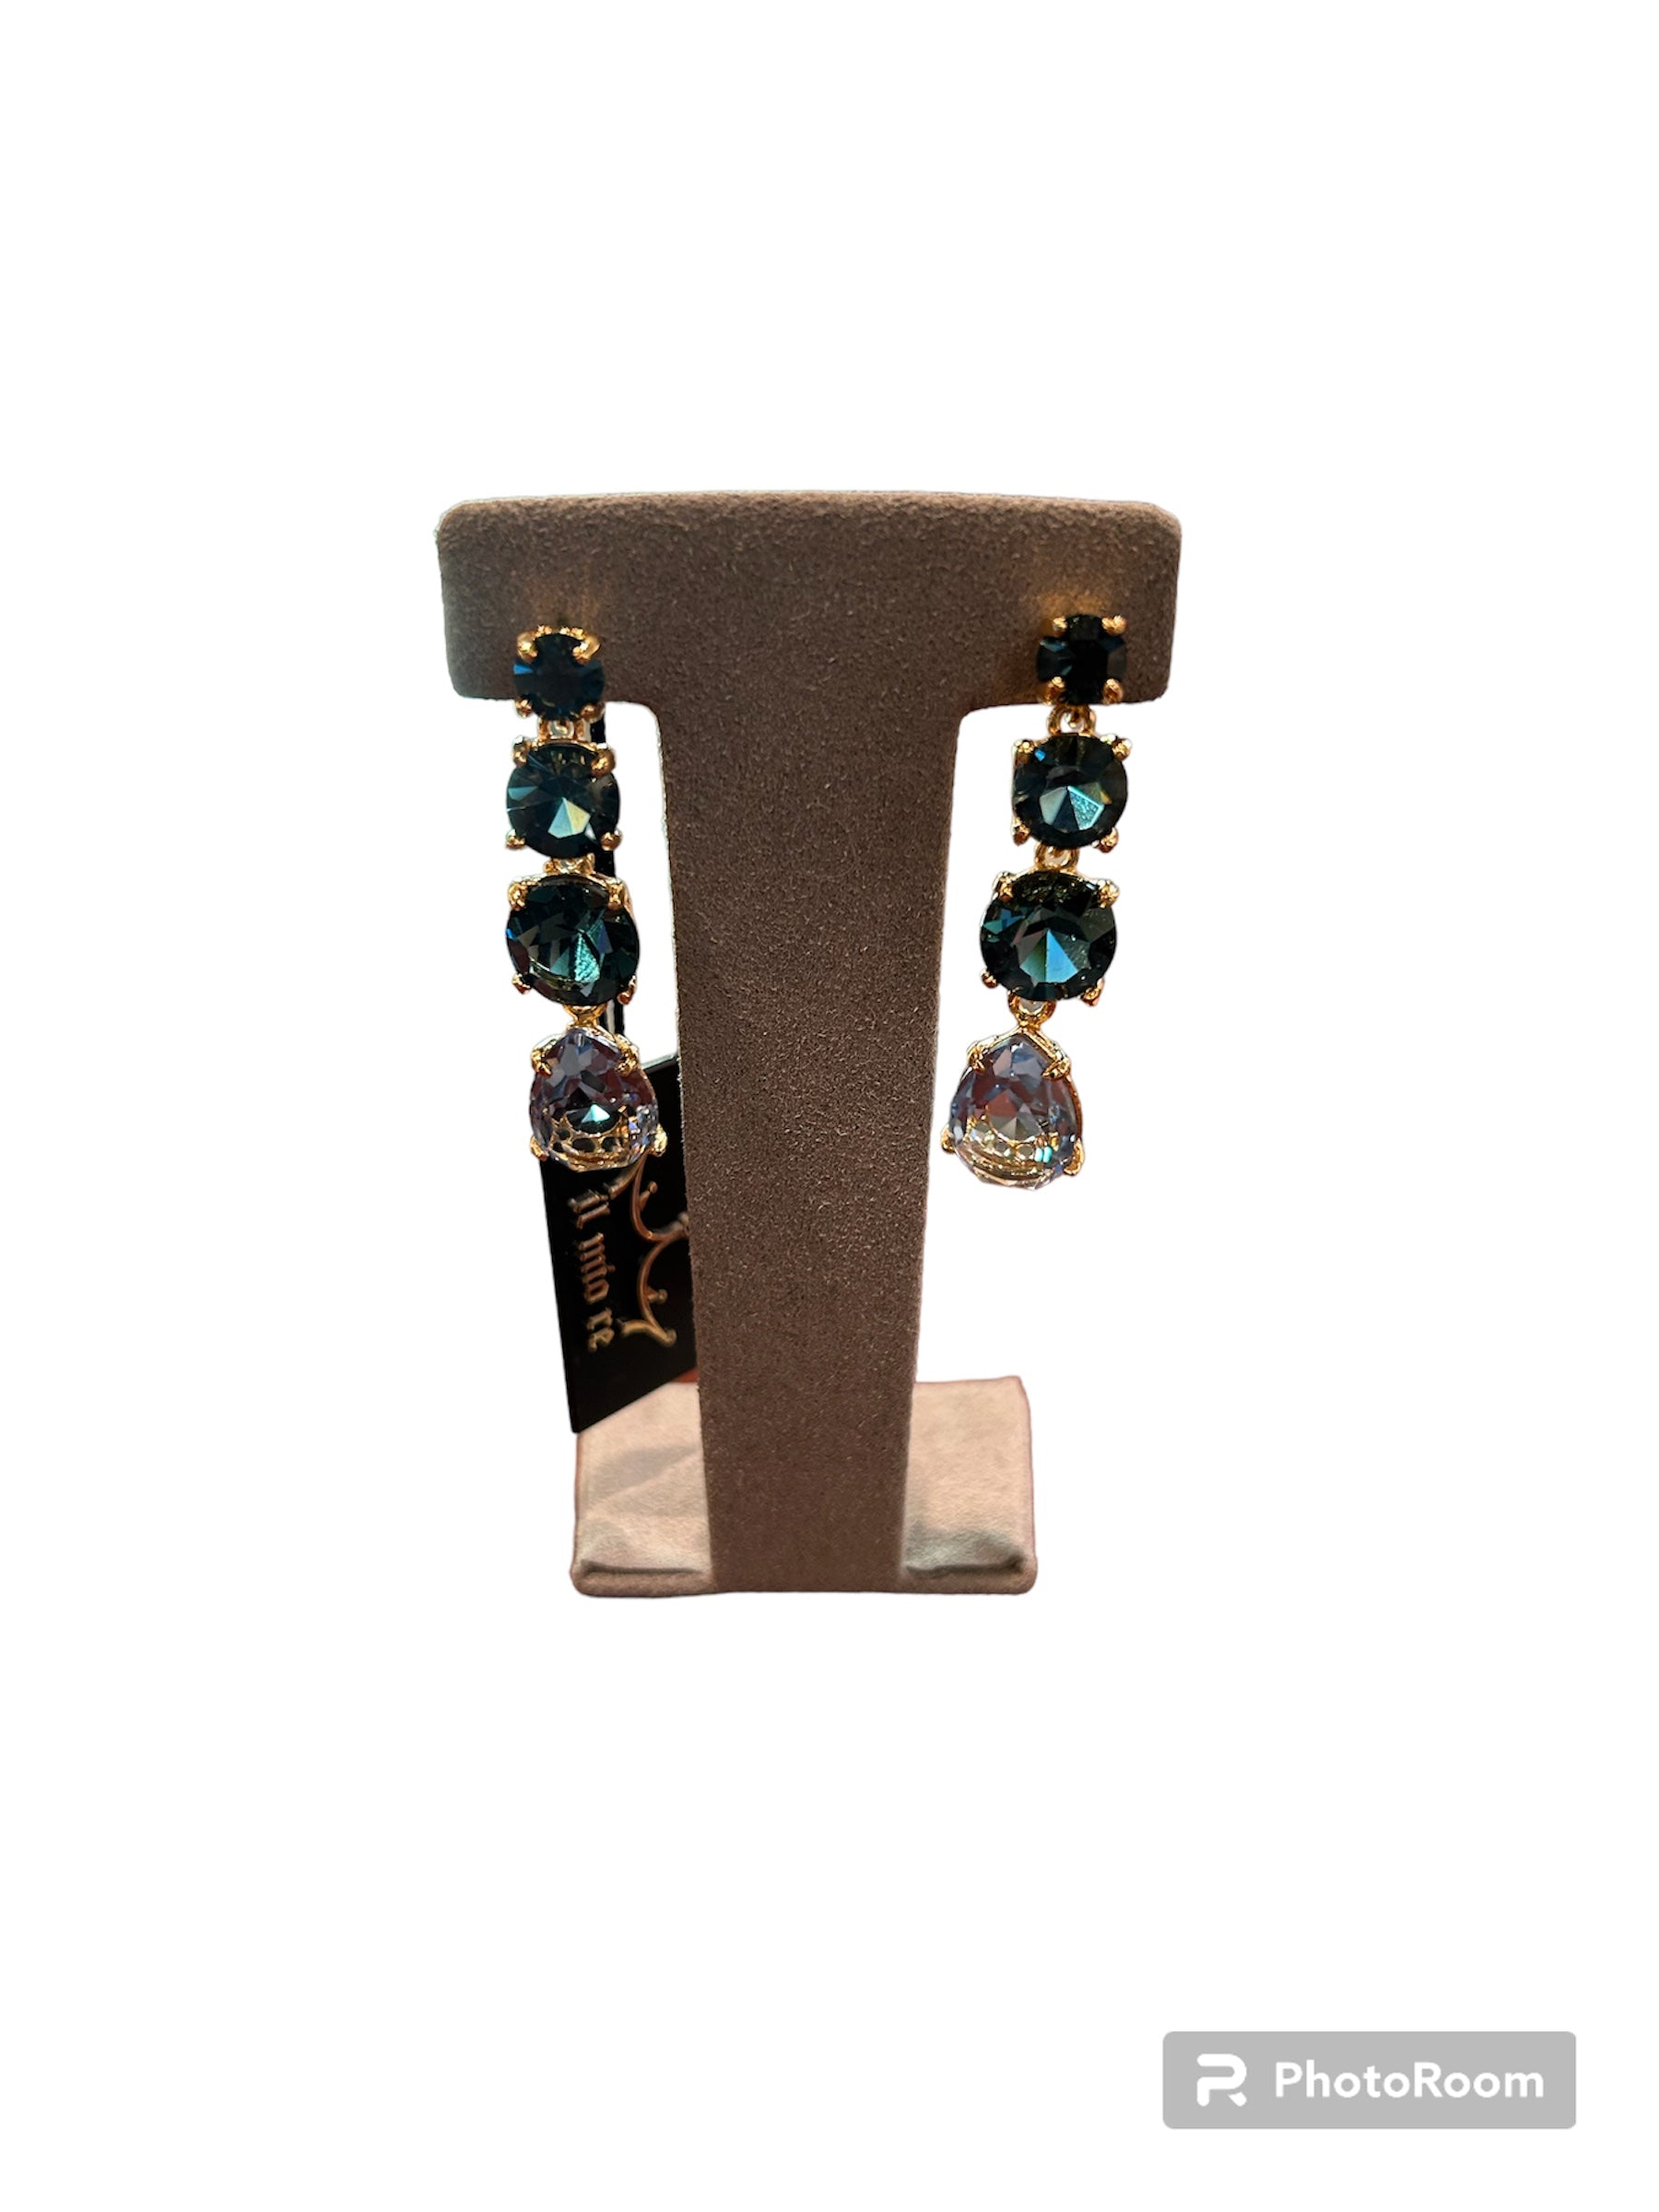 IL Mio Re - Gilt bronze pendant earrings with blue stones - ILMIORE OR 022 AZZ